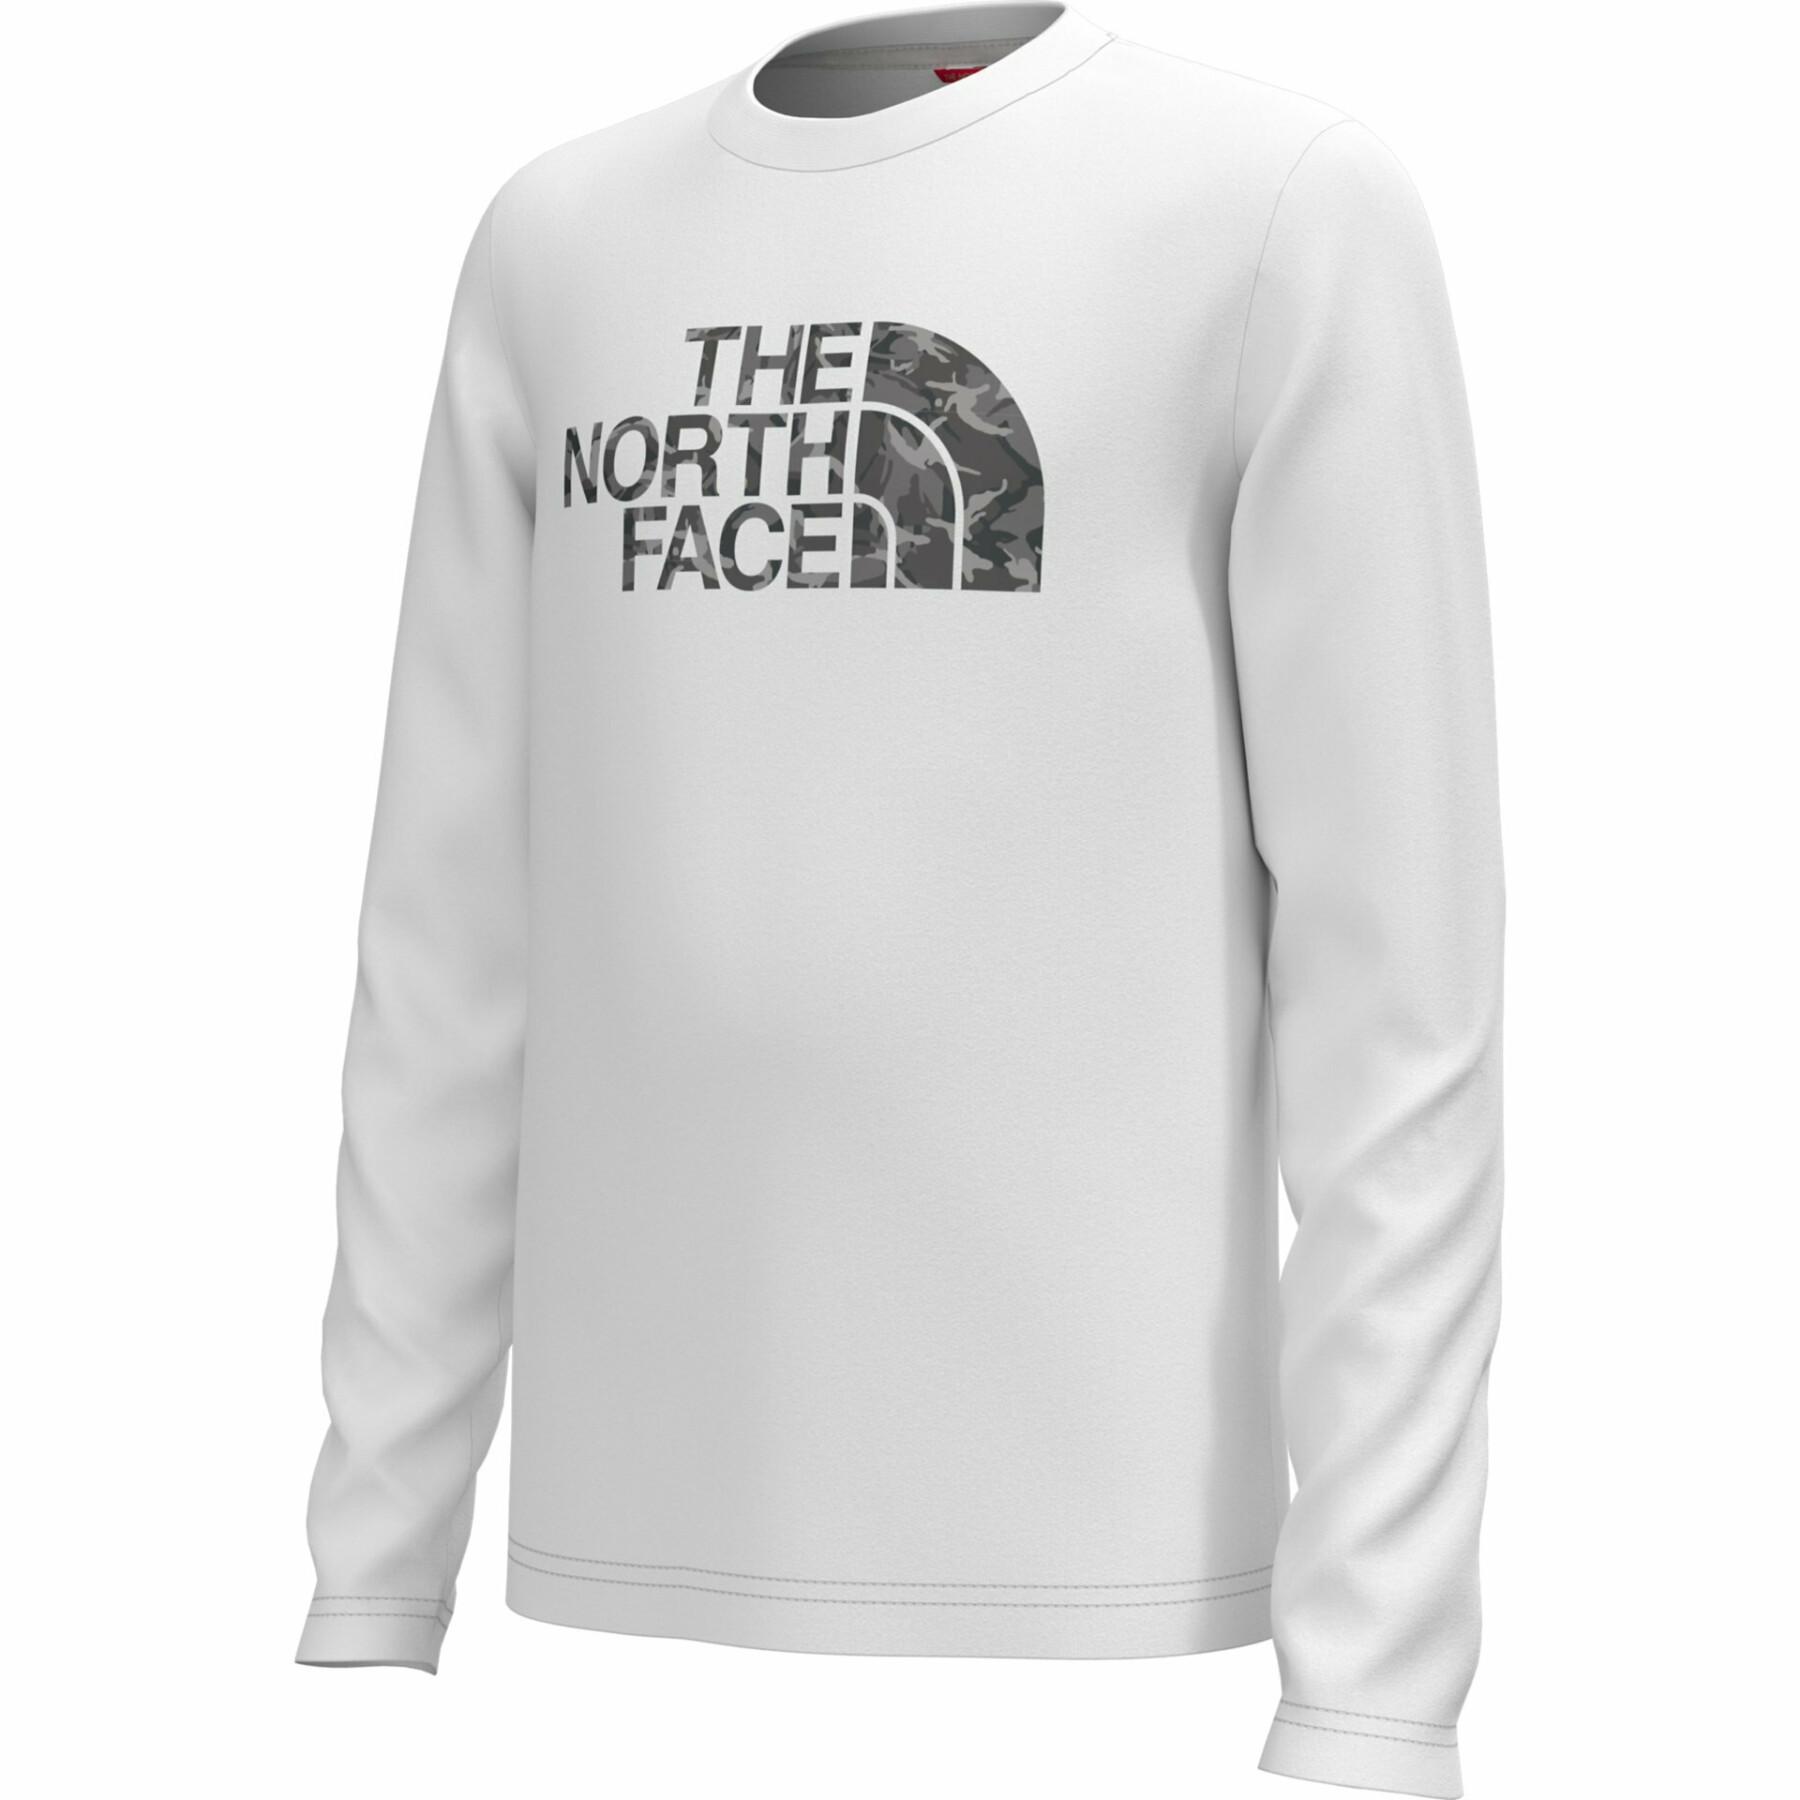 T-shirt maniche lunghe per bambini The North Face Easy